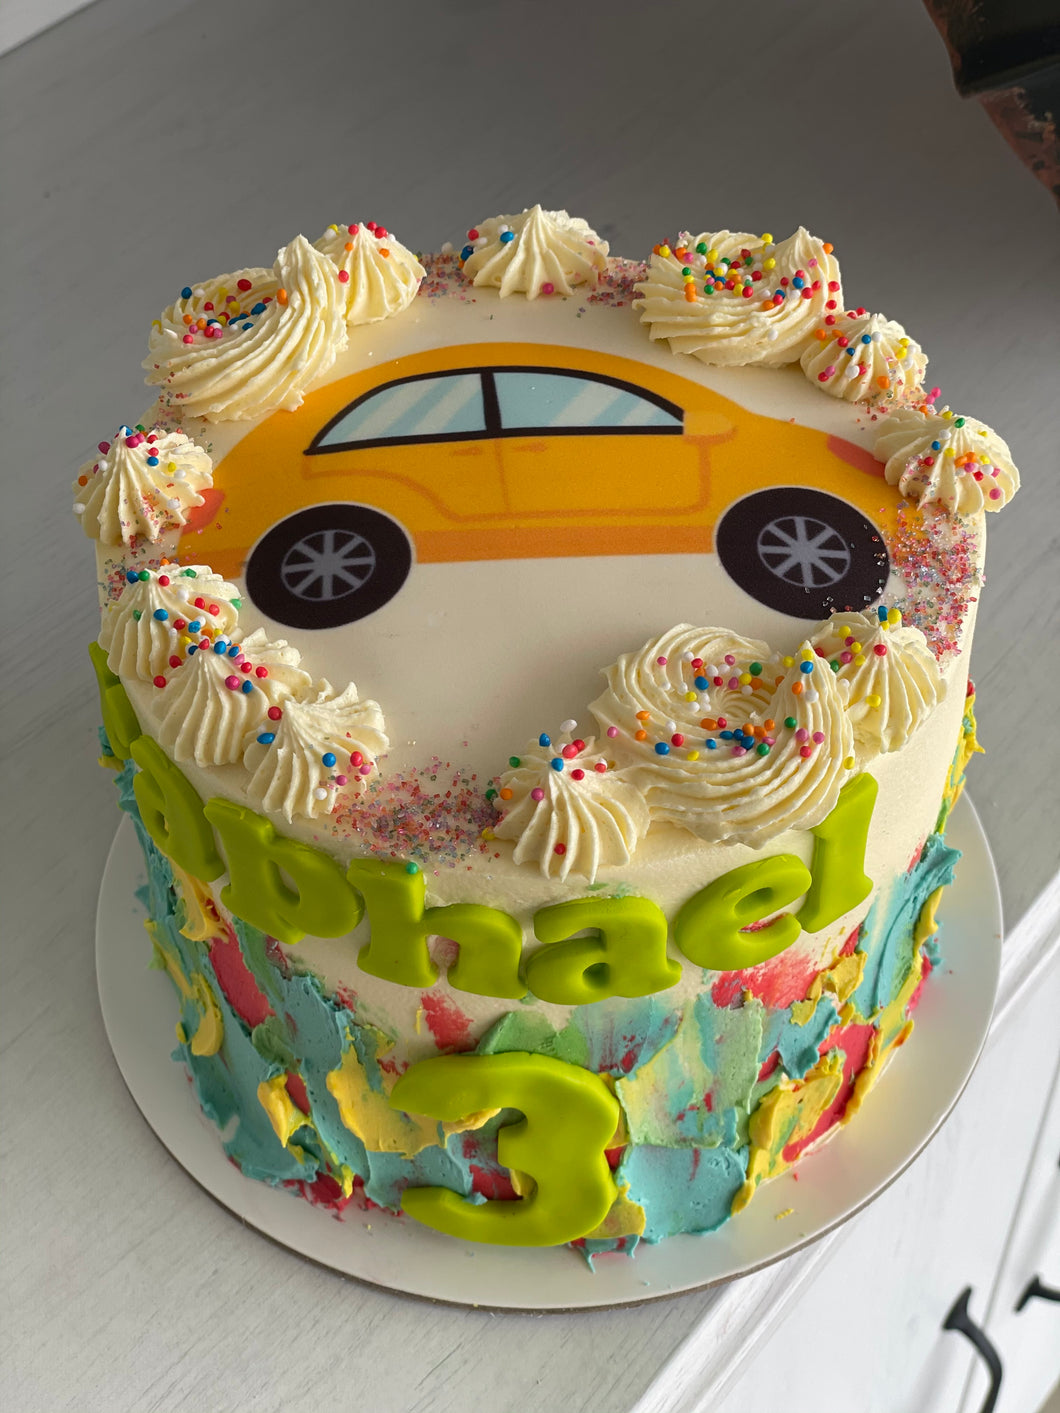 6” Cars image cake